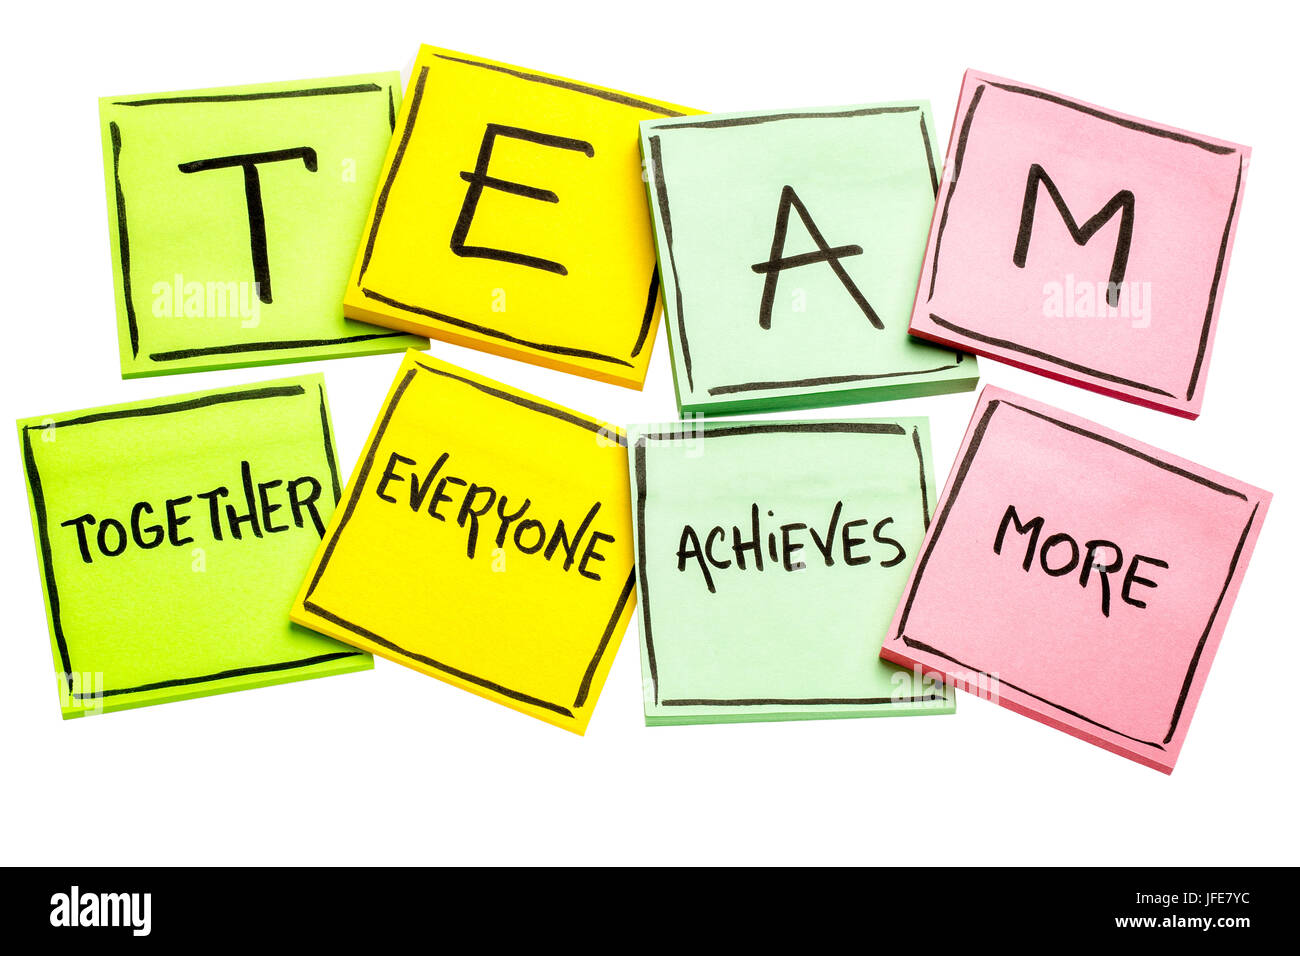 TEAM acronym (together everyone achieves more), teamwork ...